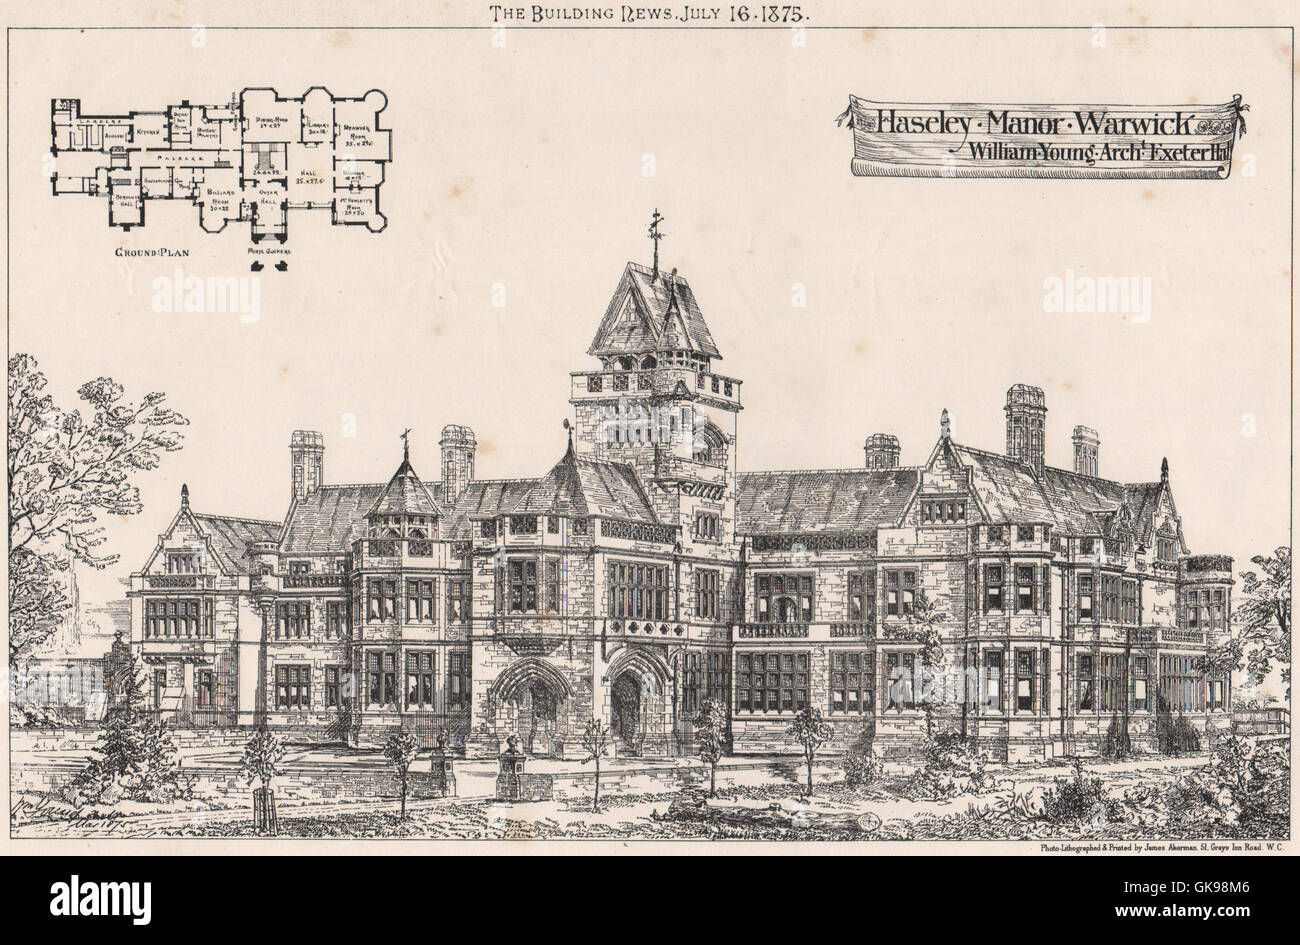 Hasely Manor, Warwick; William Young Architekt, Exeter Hall. Warwickshire, 1875 Stockfoto